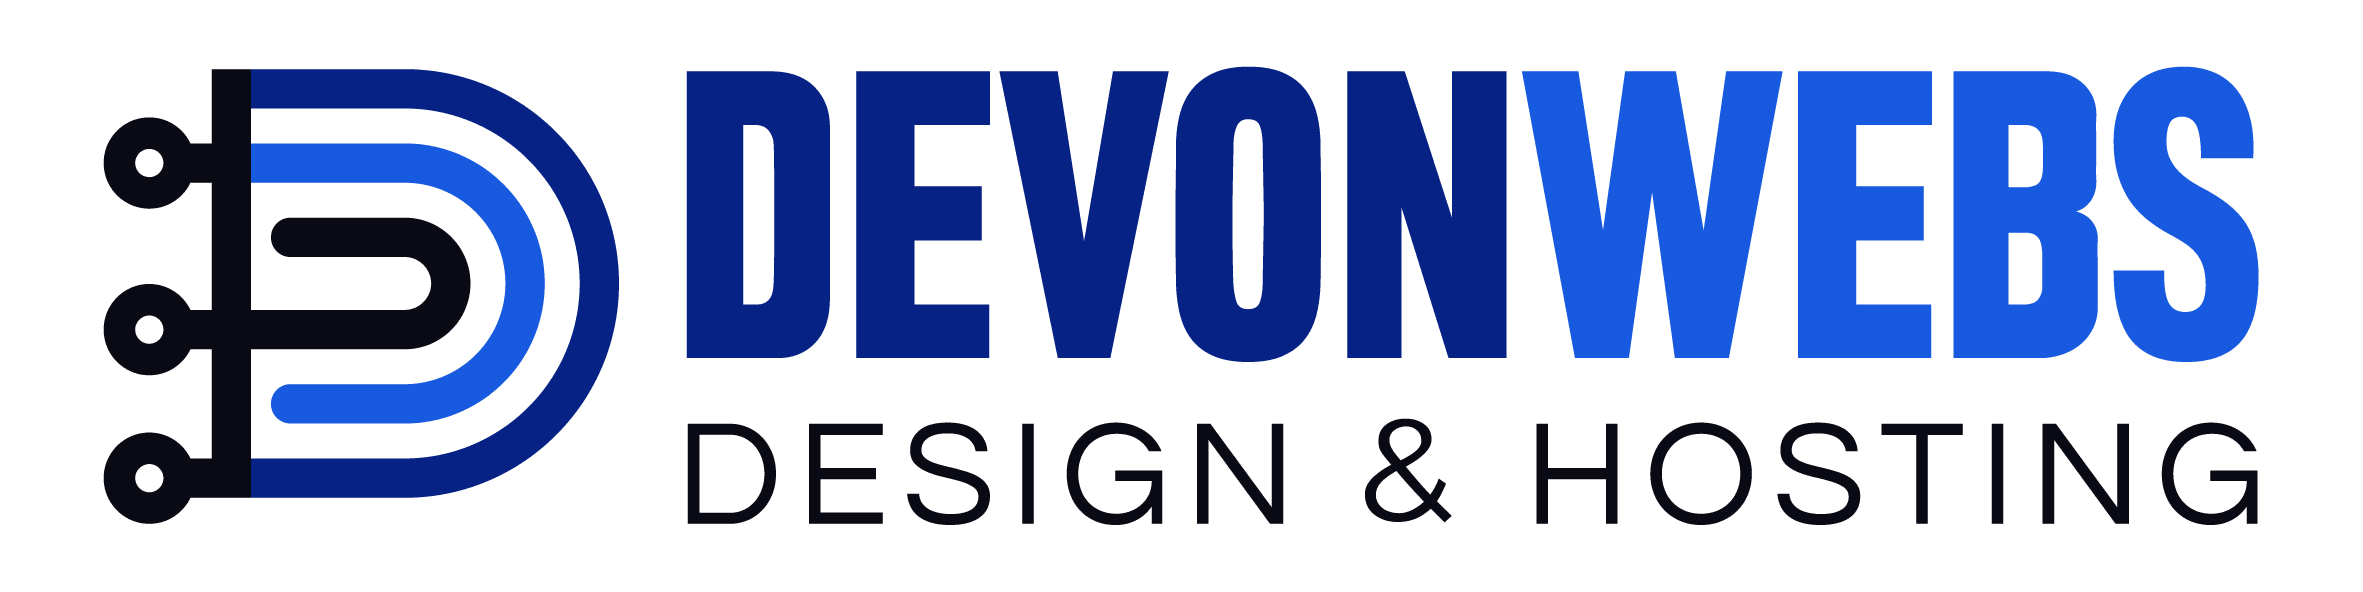 DevonWebs Design & Hosting